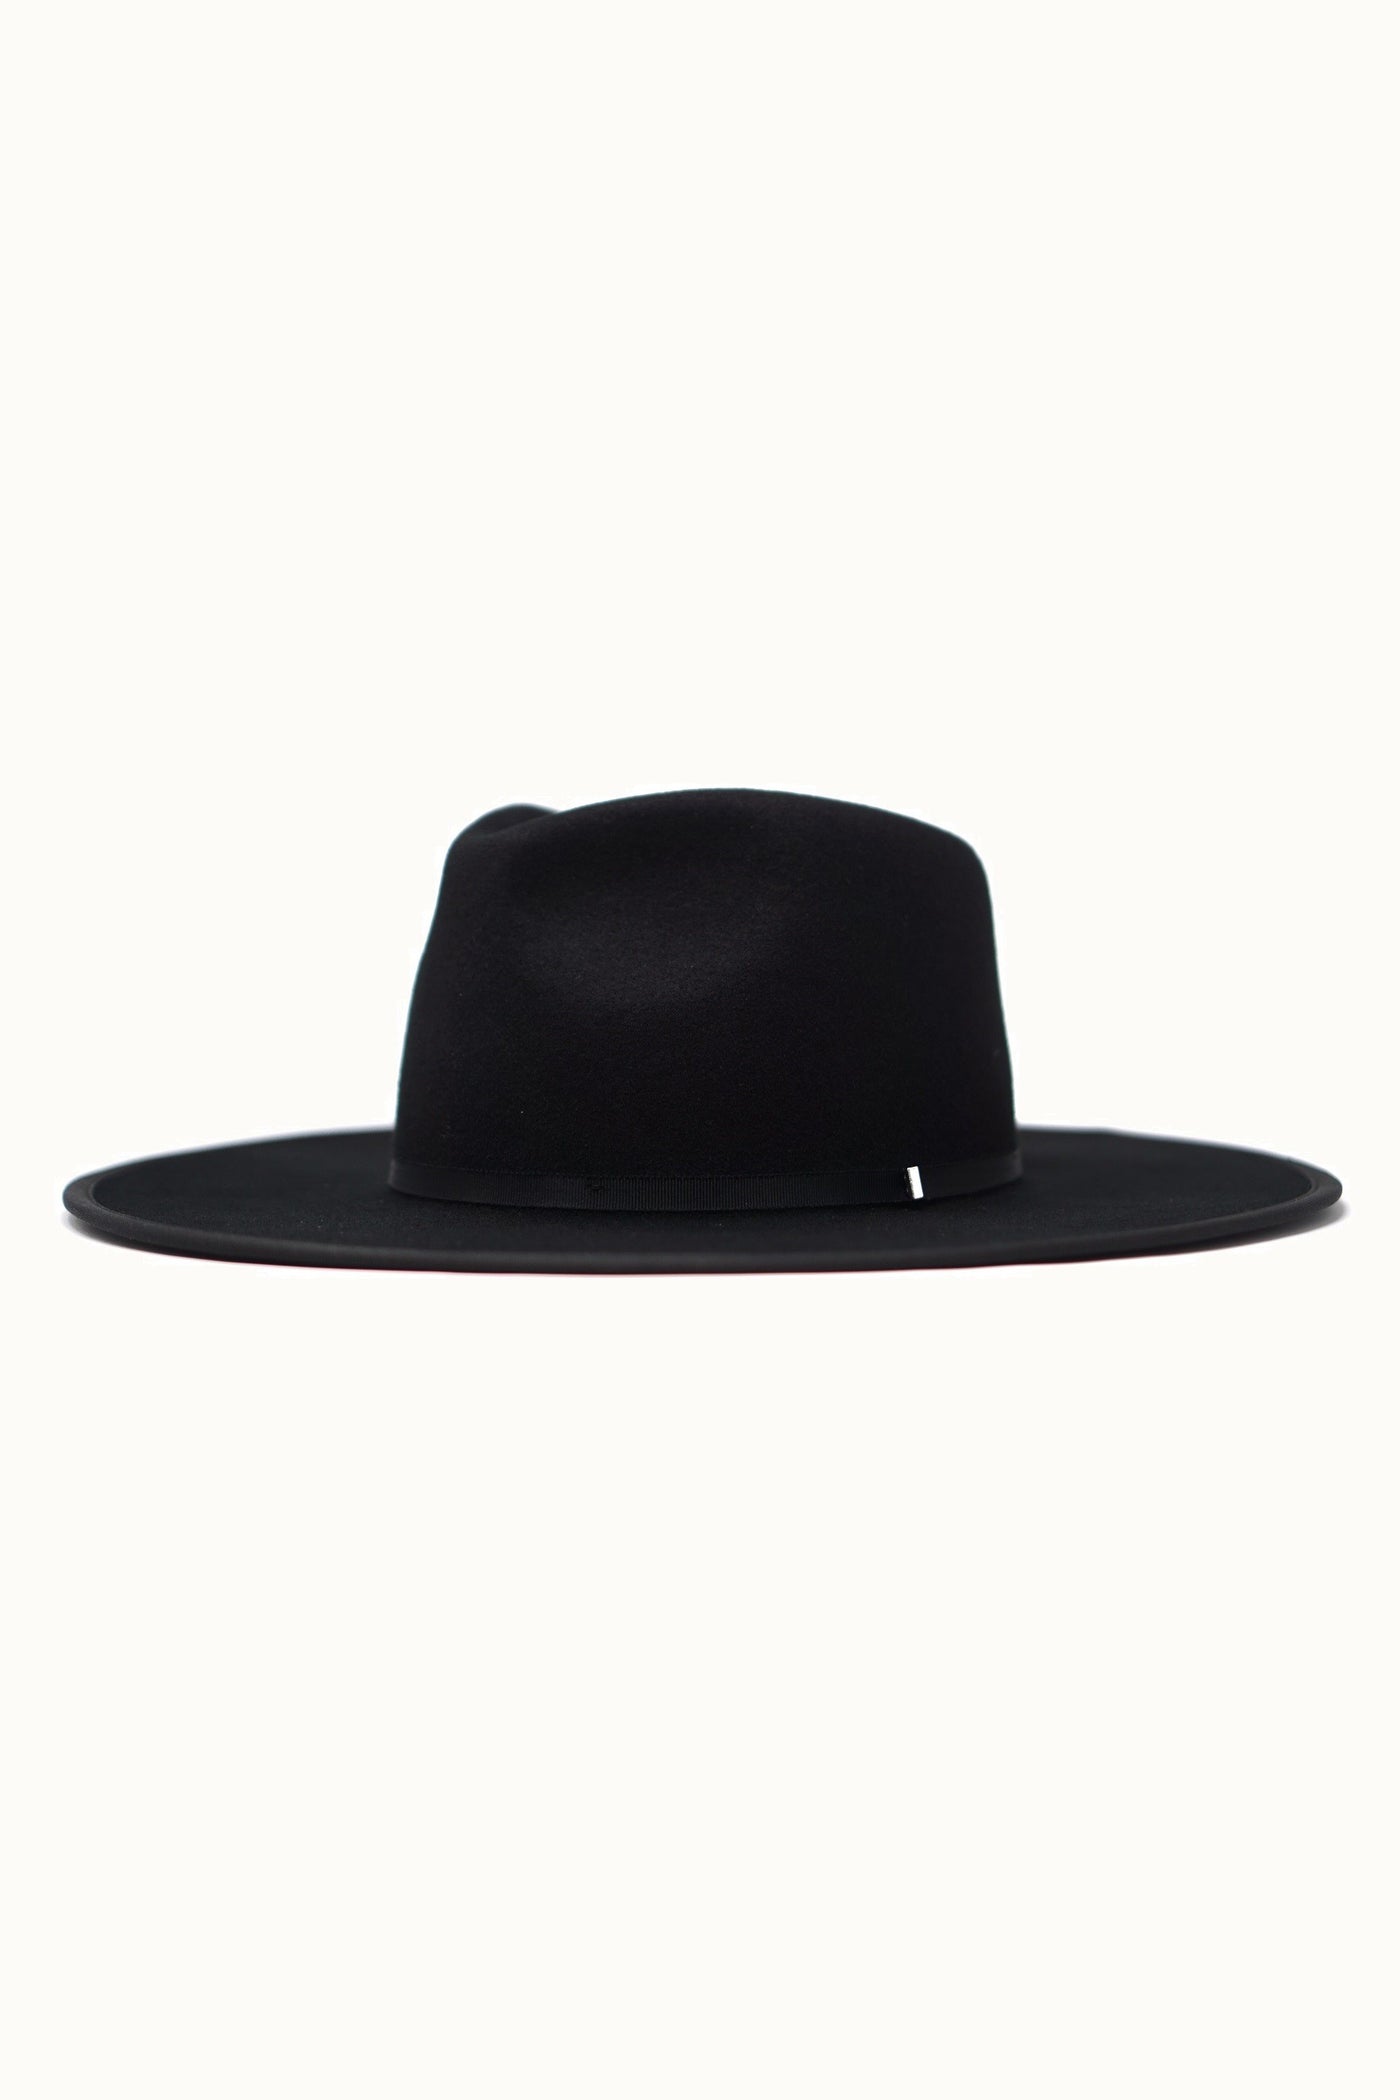 Billie Wool Rancher Hat by Olive & Pique - Black